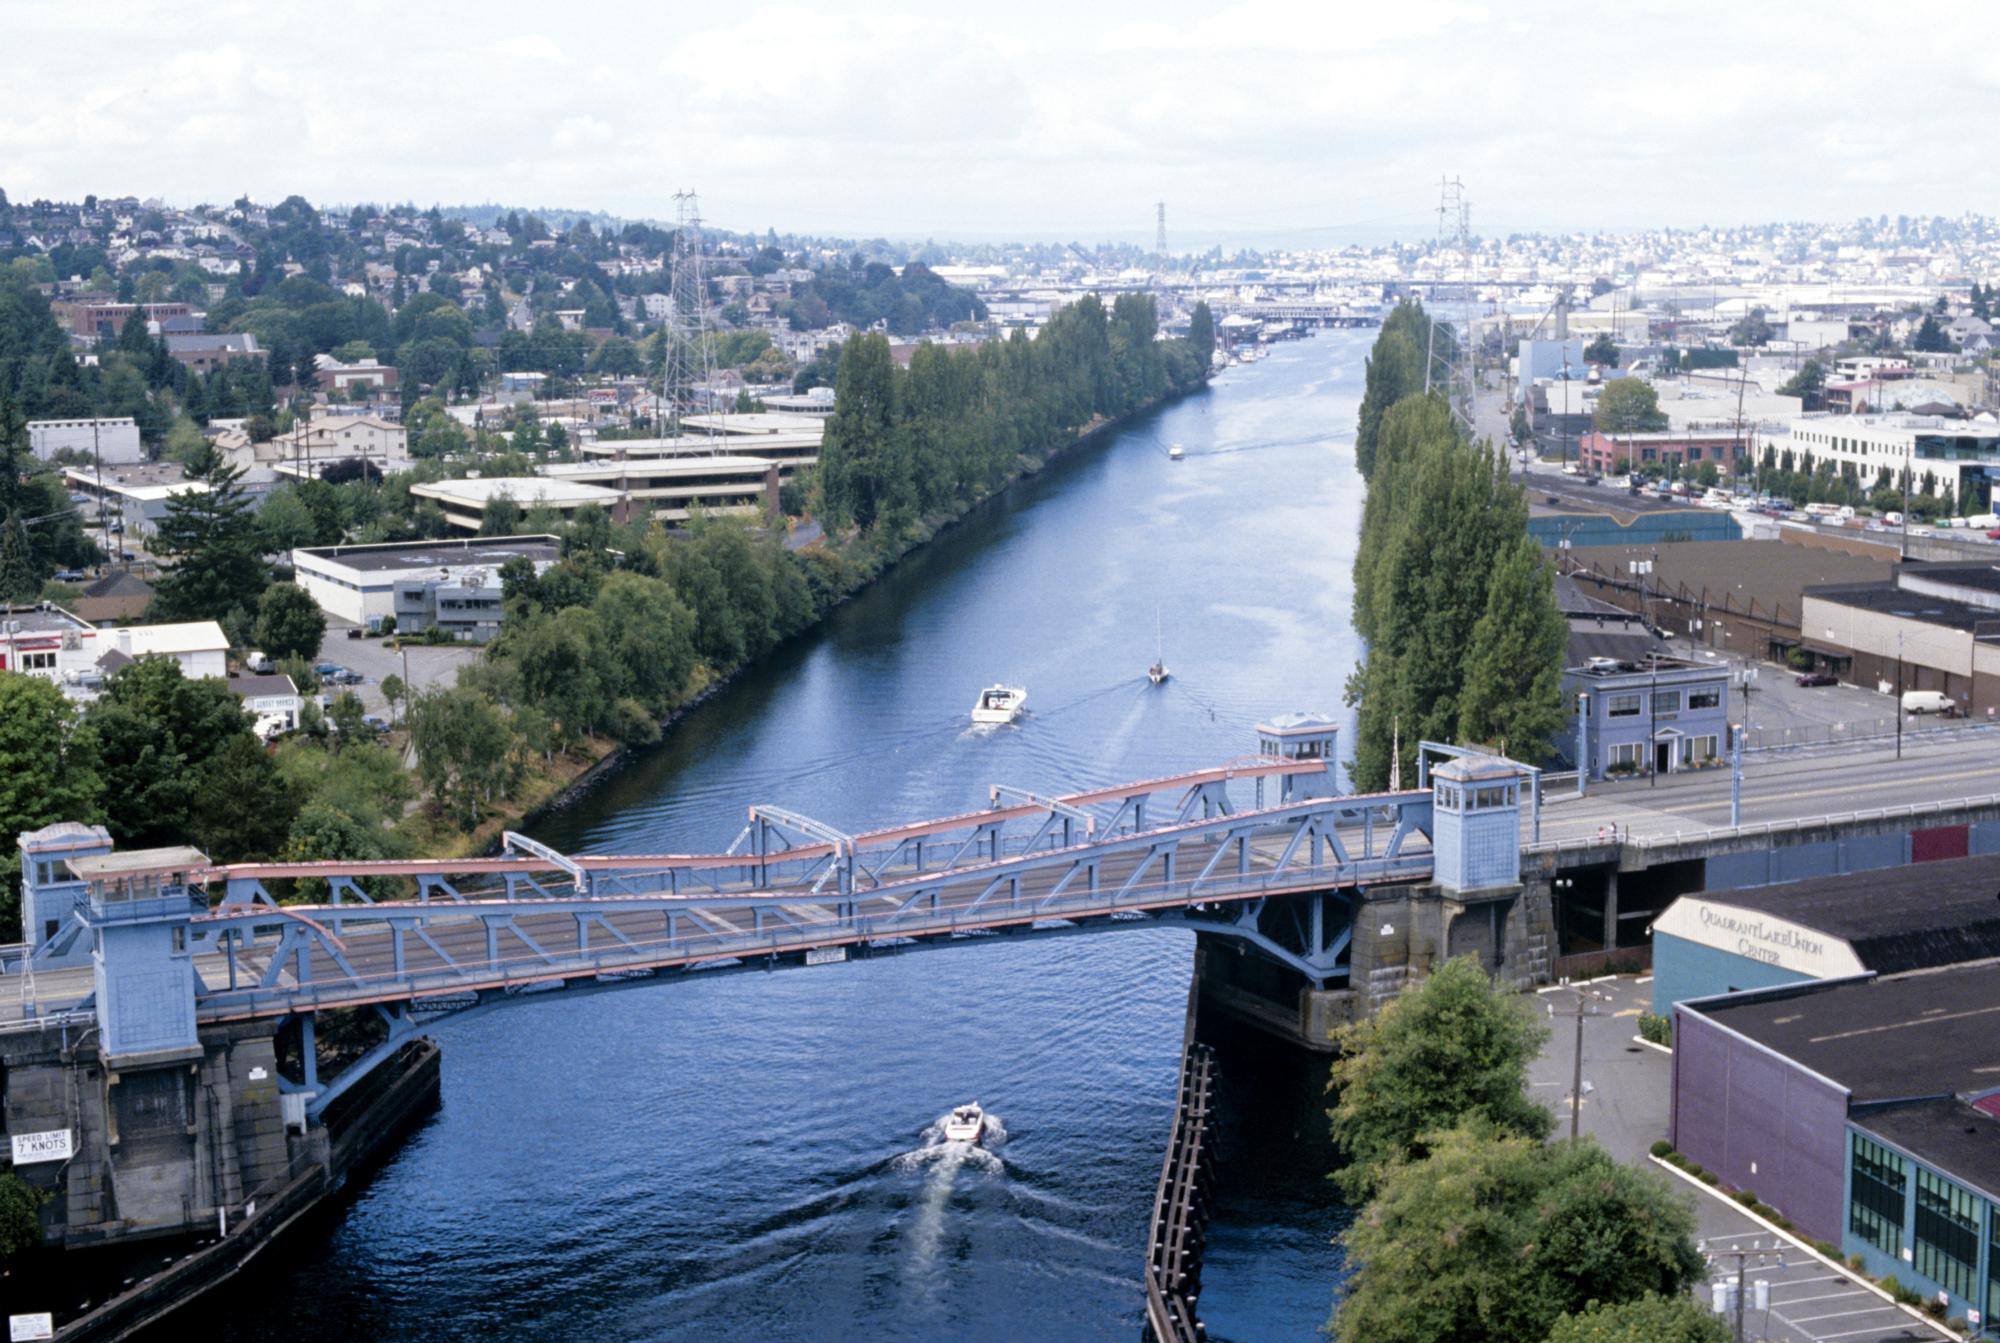 Seattle (1994) - Fremont Bridge